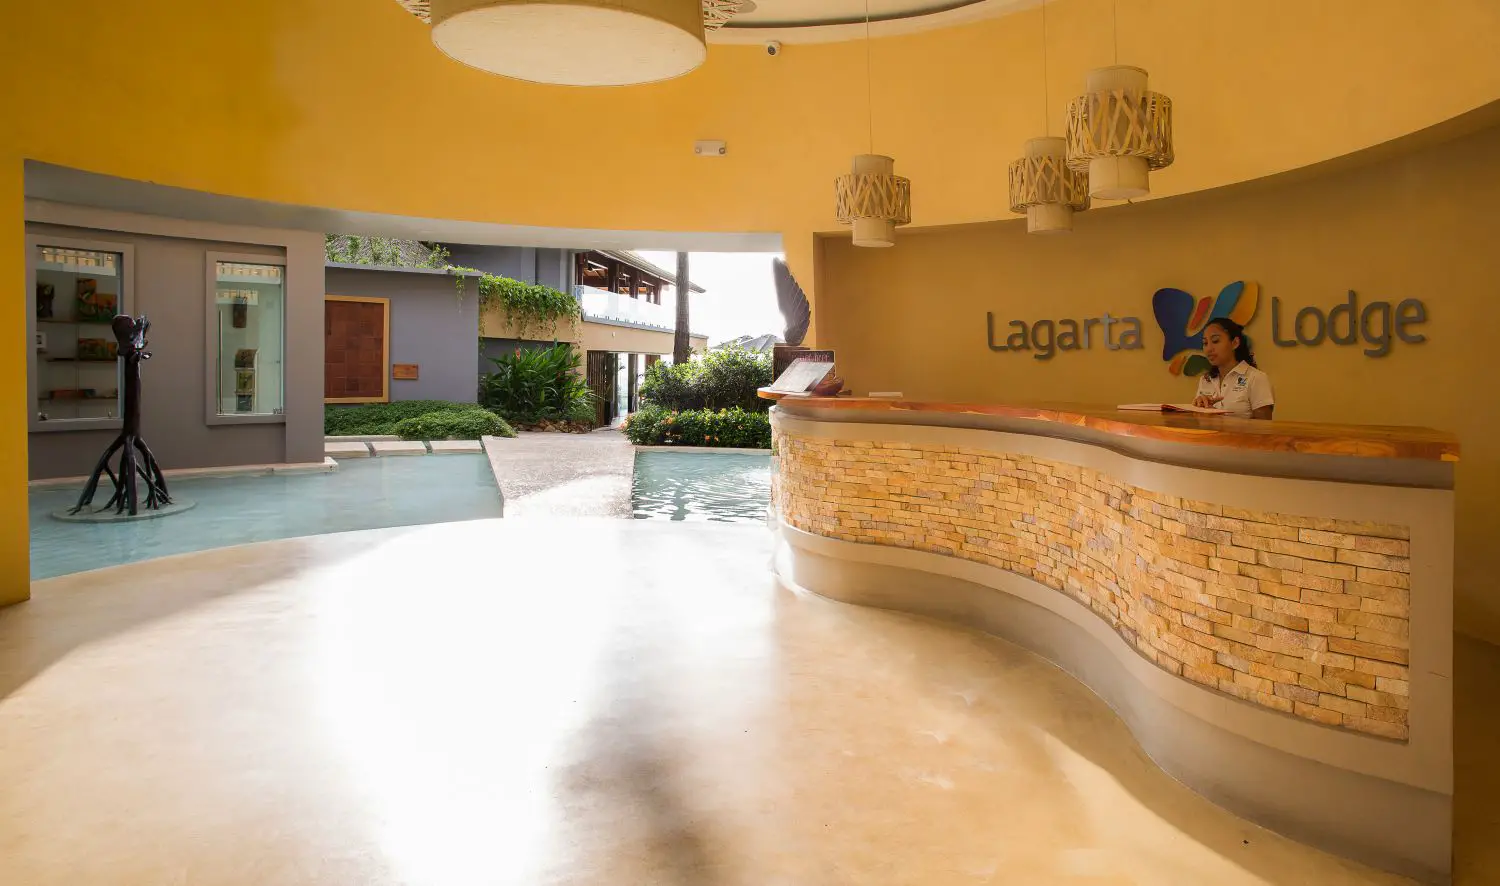 Lagarta Lodge